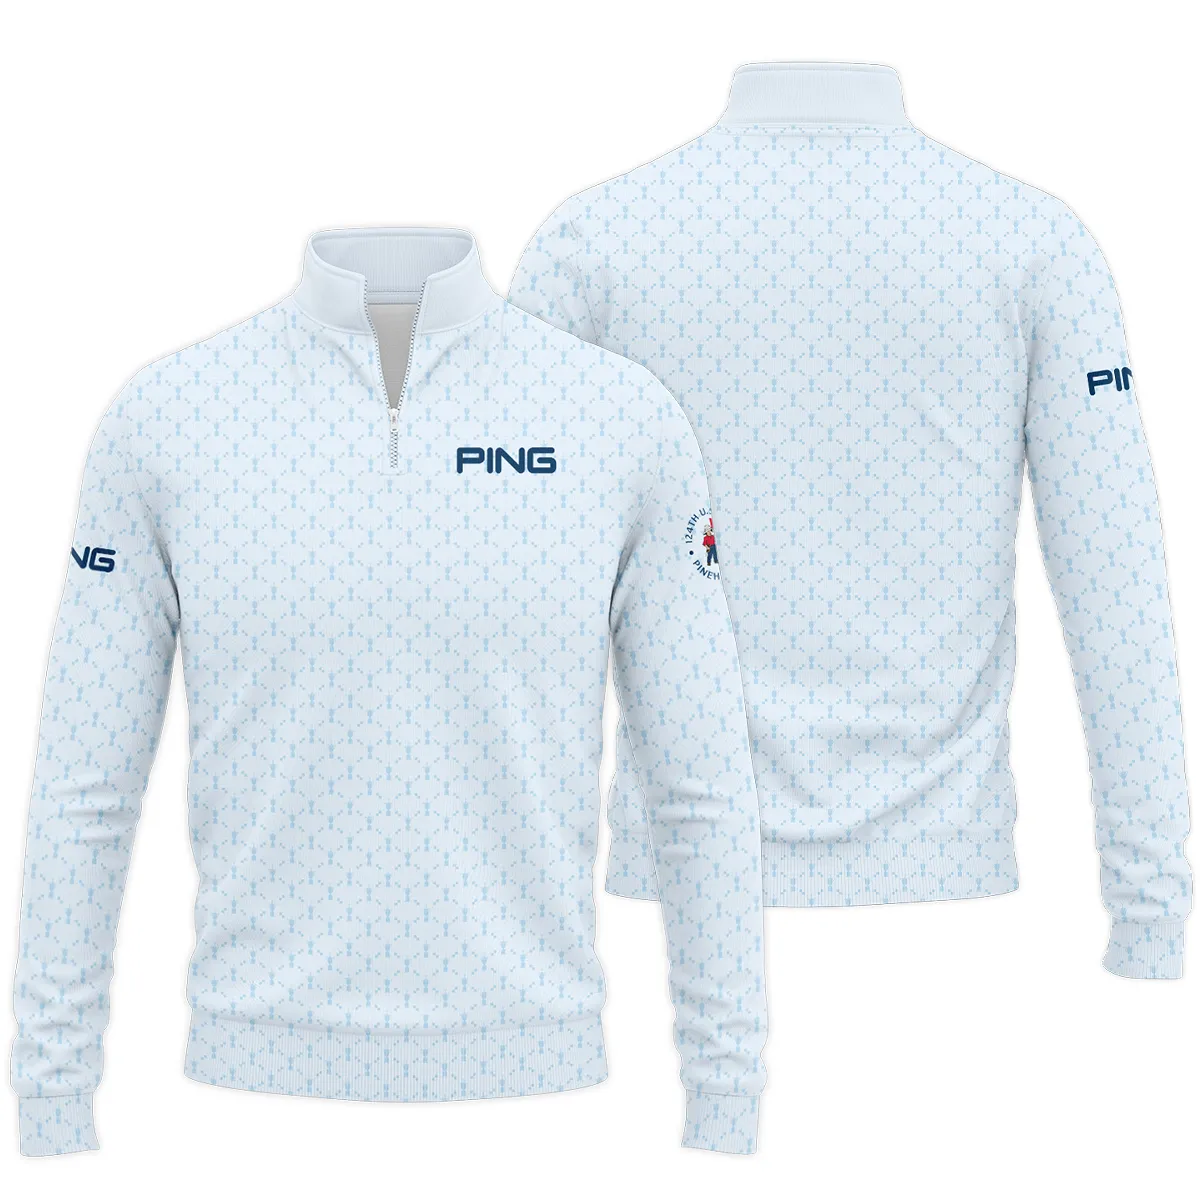 Golf Sport Pattern Blue Sport Uniform 124th U.S. Open Pinehurst Ping Quarter-Zip Jacket Style Classic